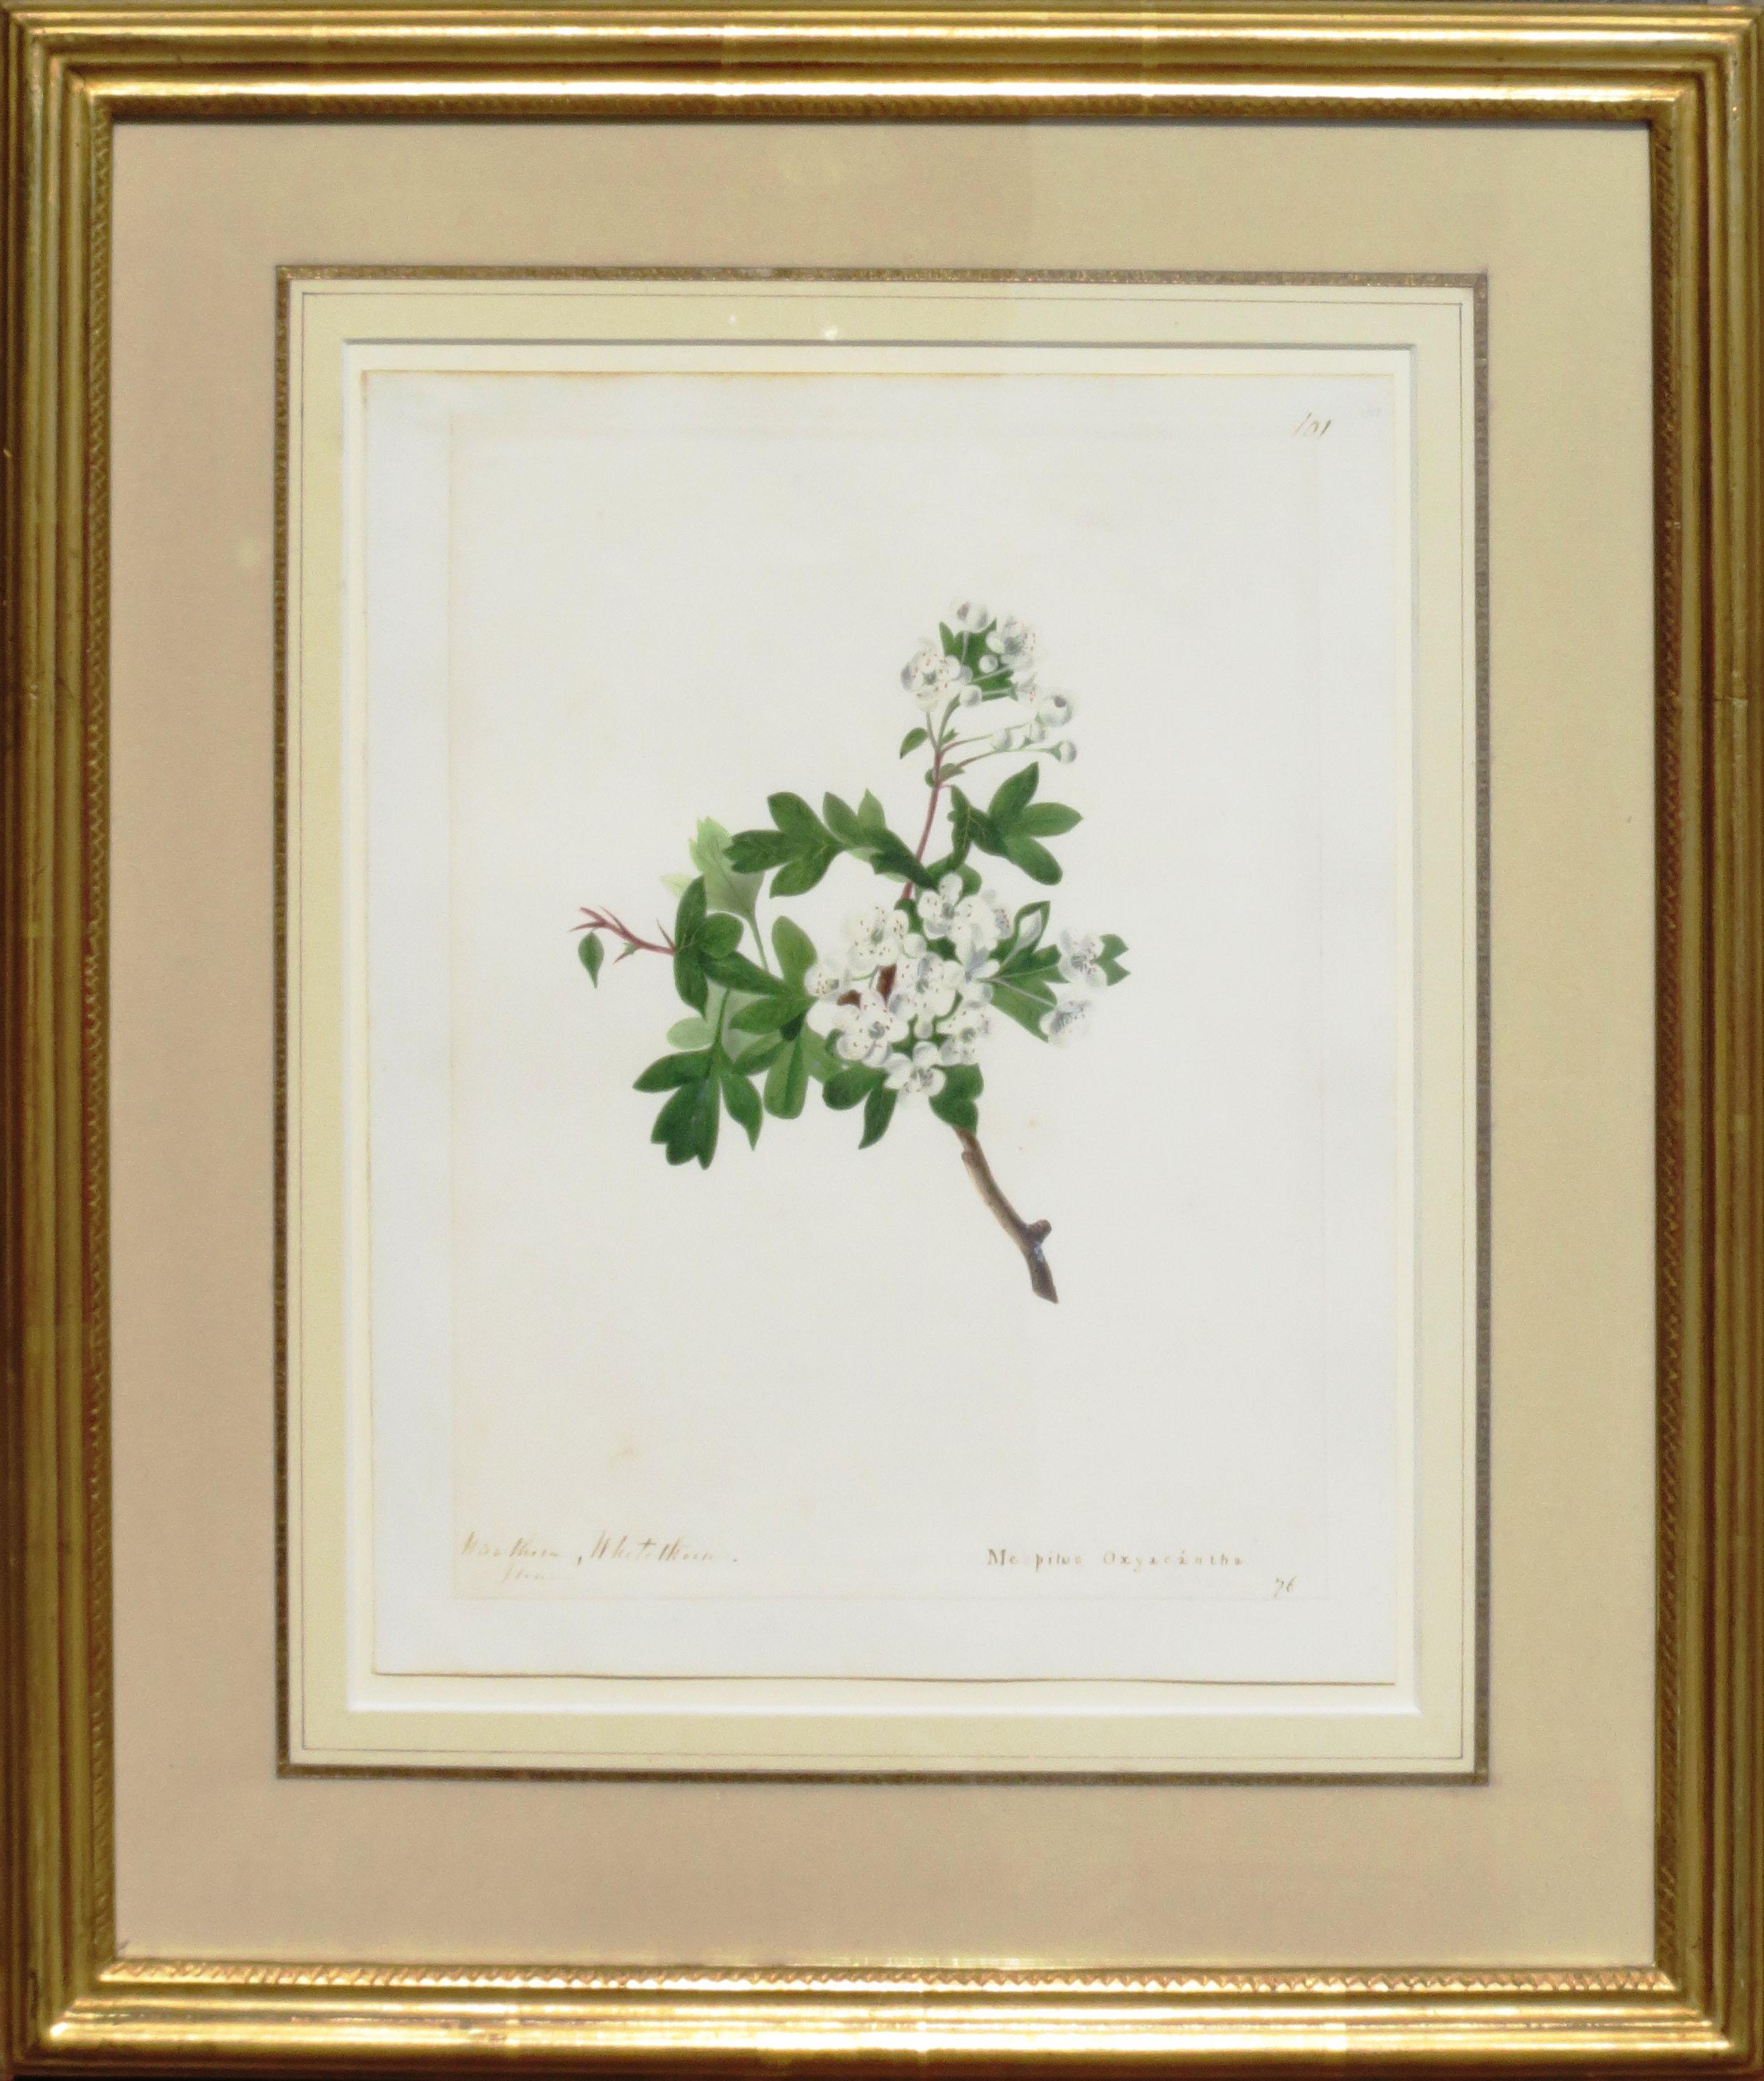 "Hawthorn, Weißthorn - Mespilus Oxycantha"